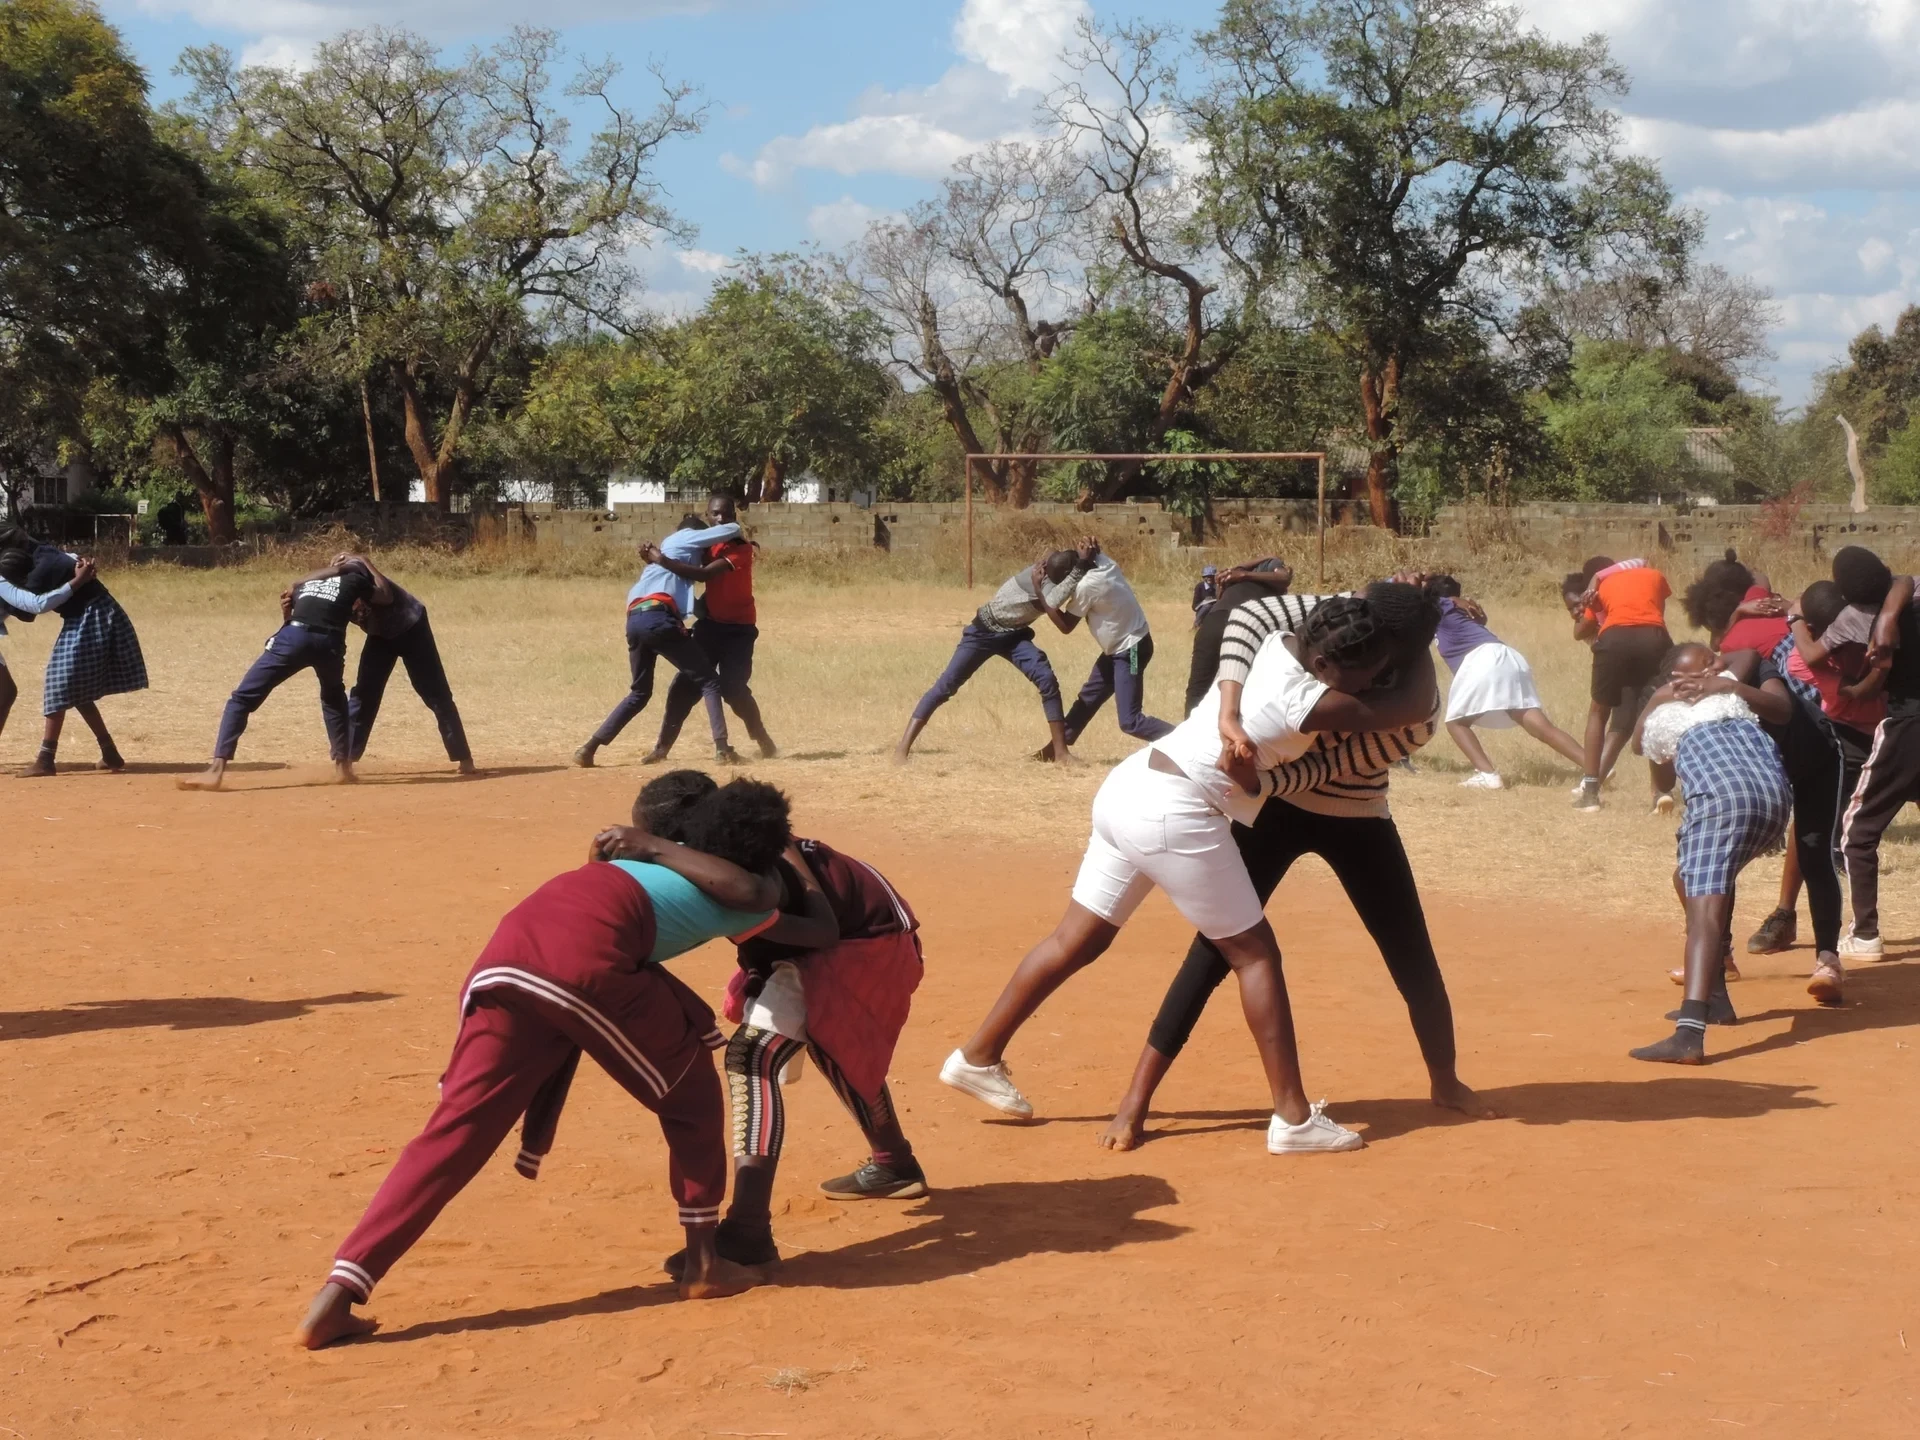 NOCZ sought after to help establish wrestling development initiative in Zambia